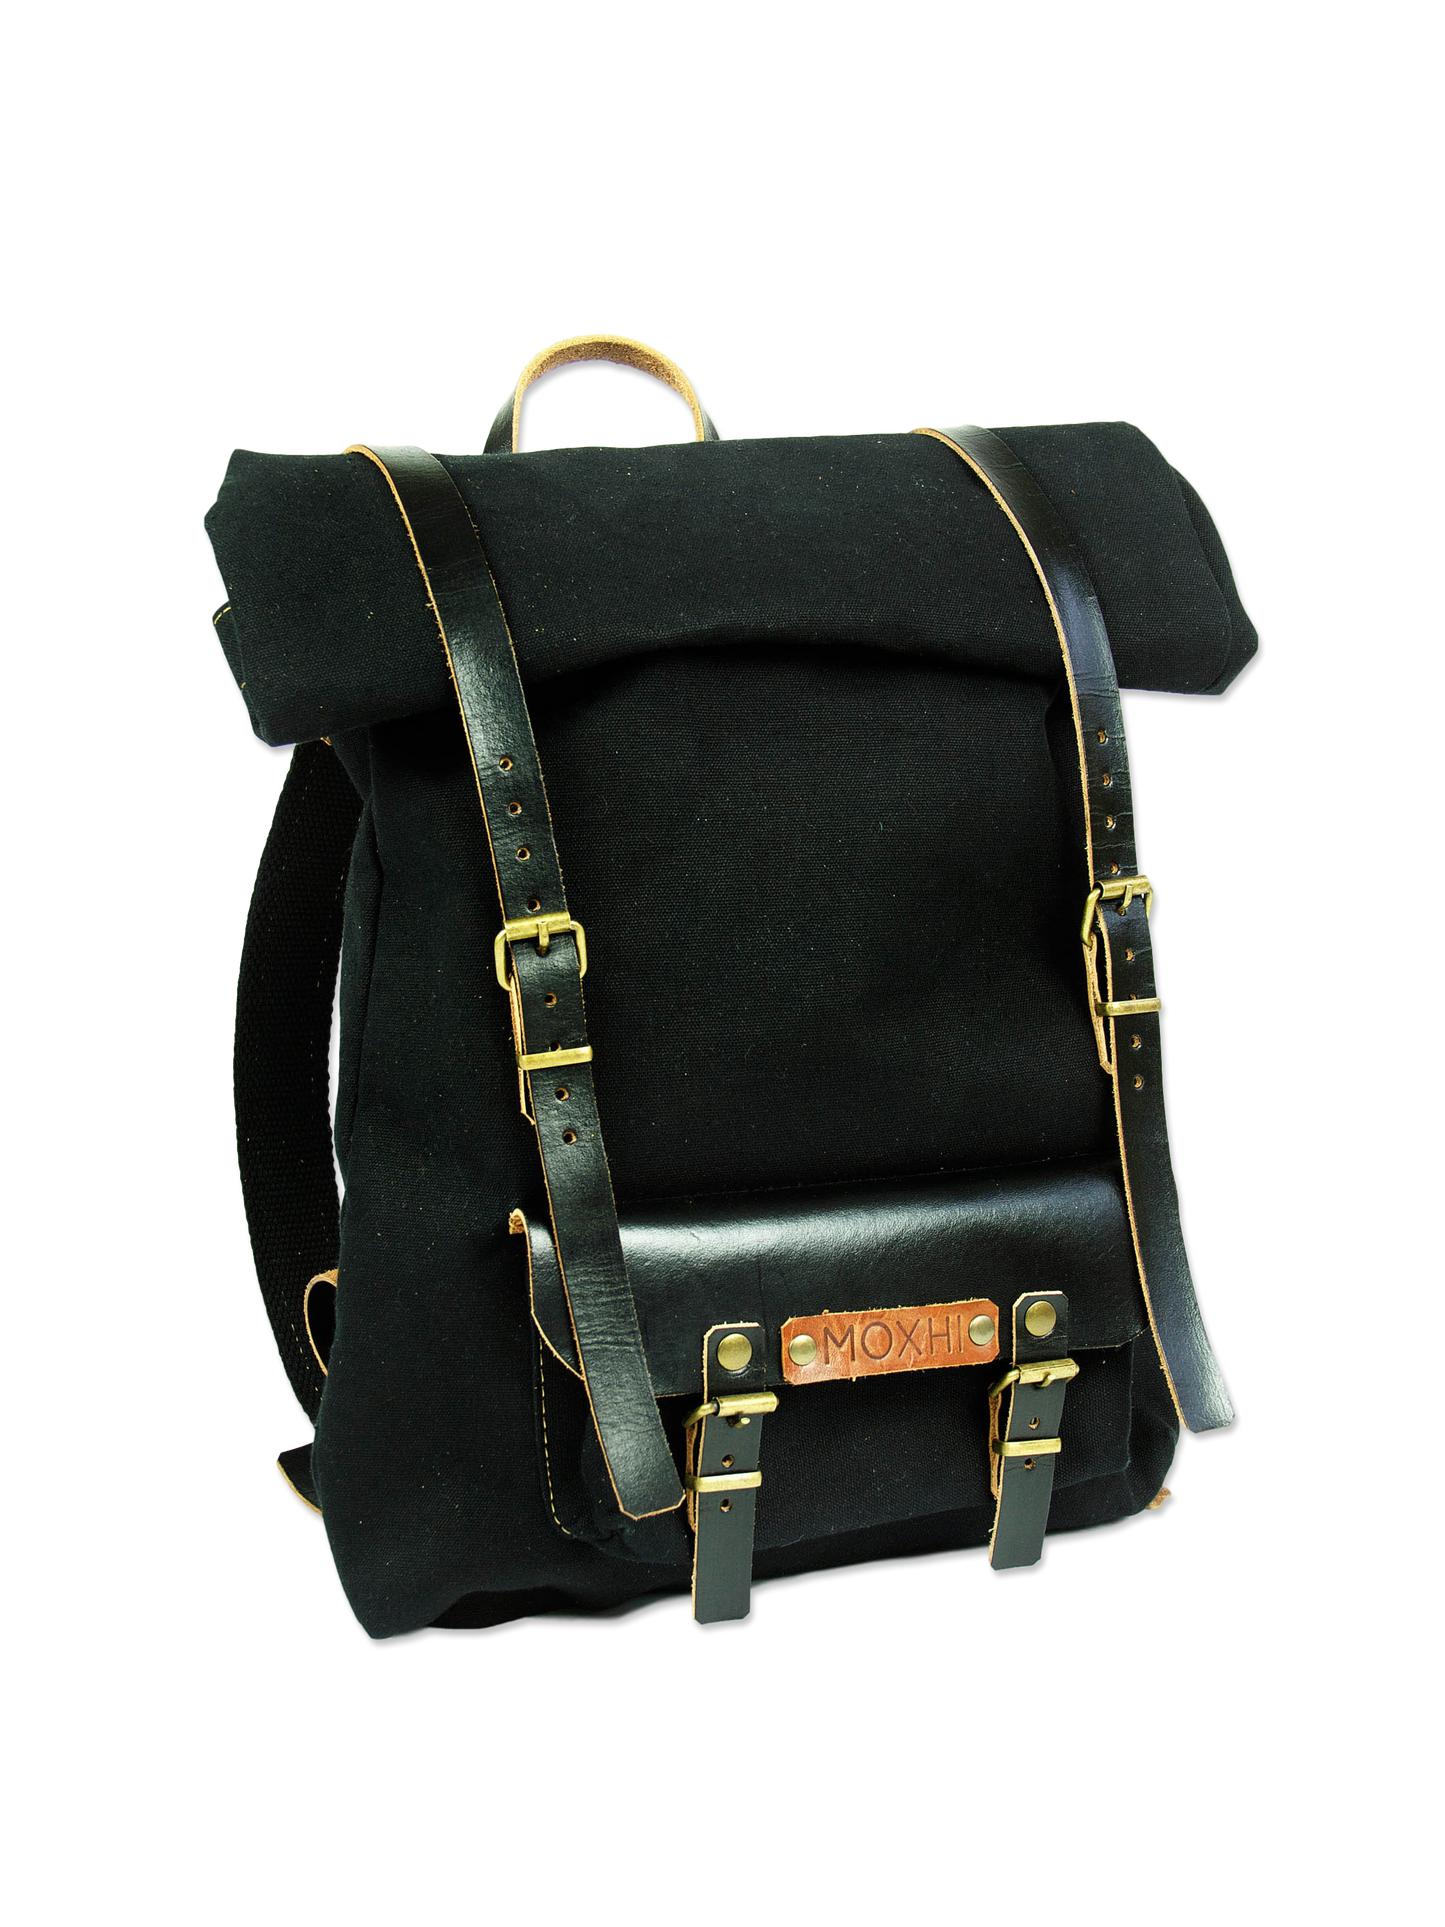 Black rolltop backpack - handcrafted